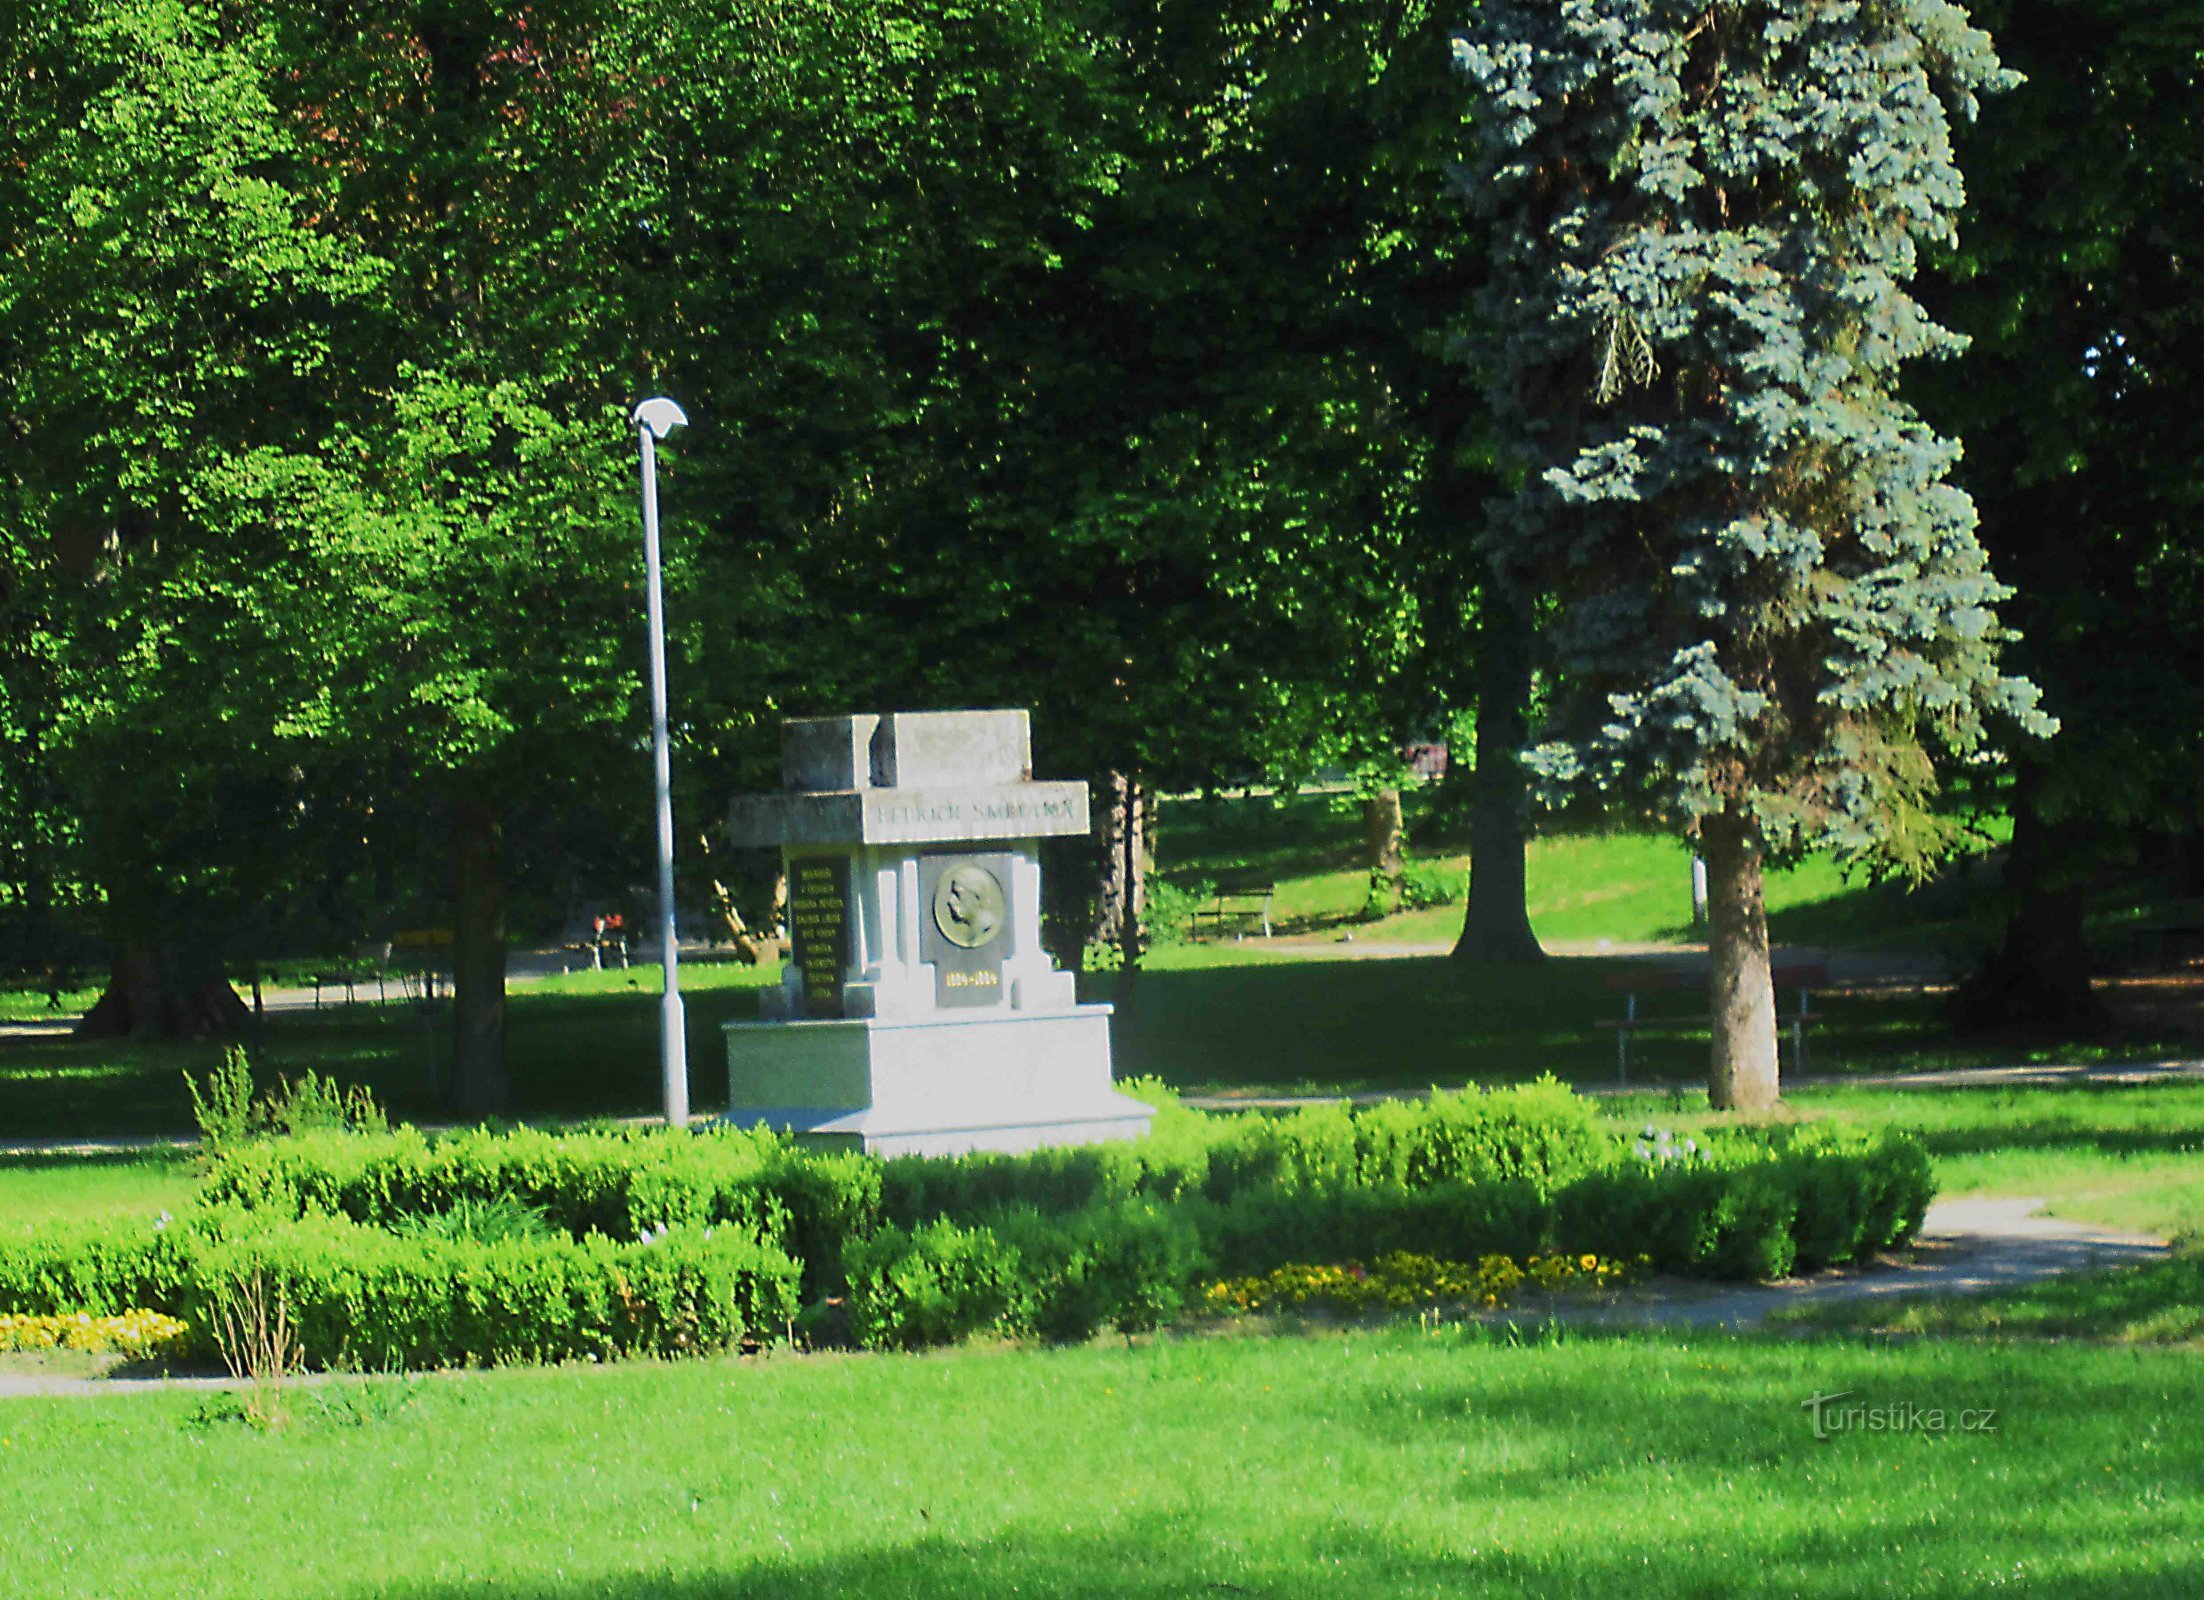 Parcul Bedřich Smetana din Vyškov